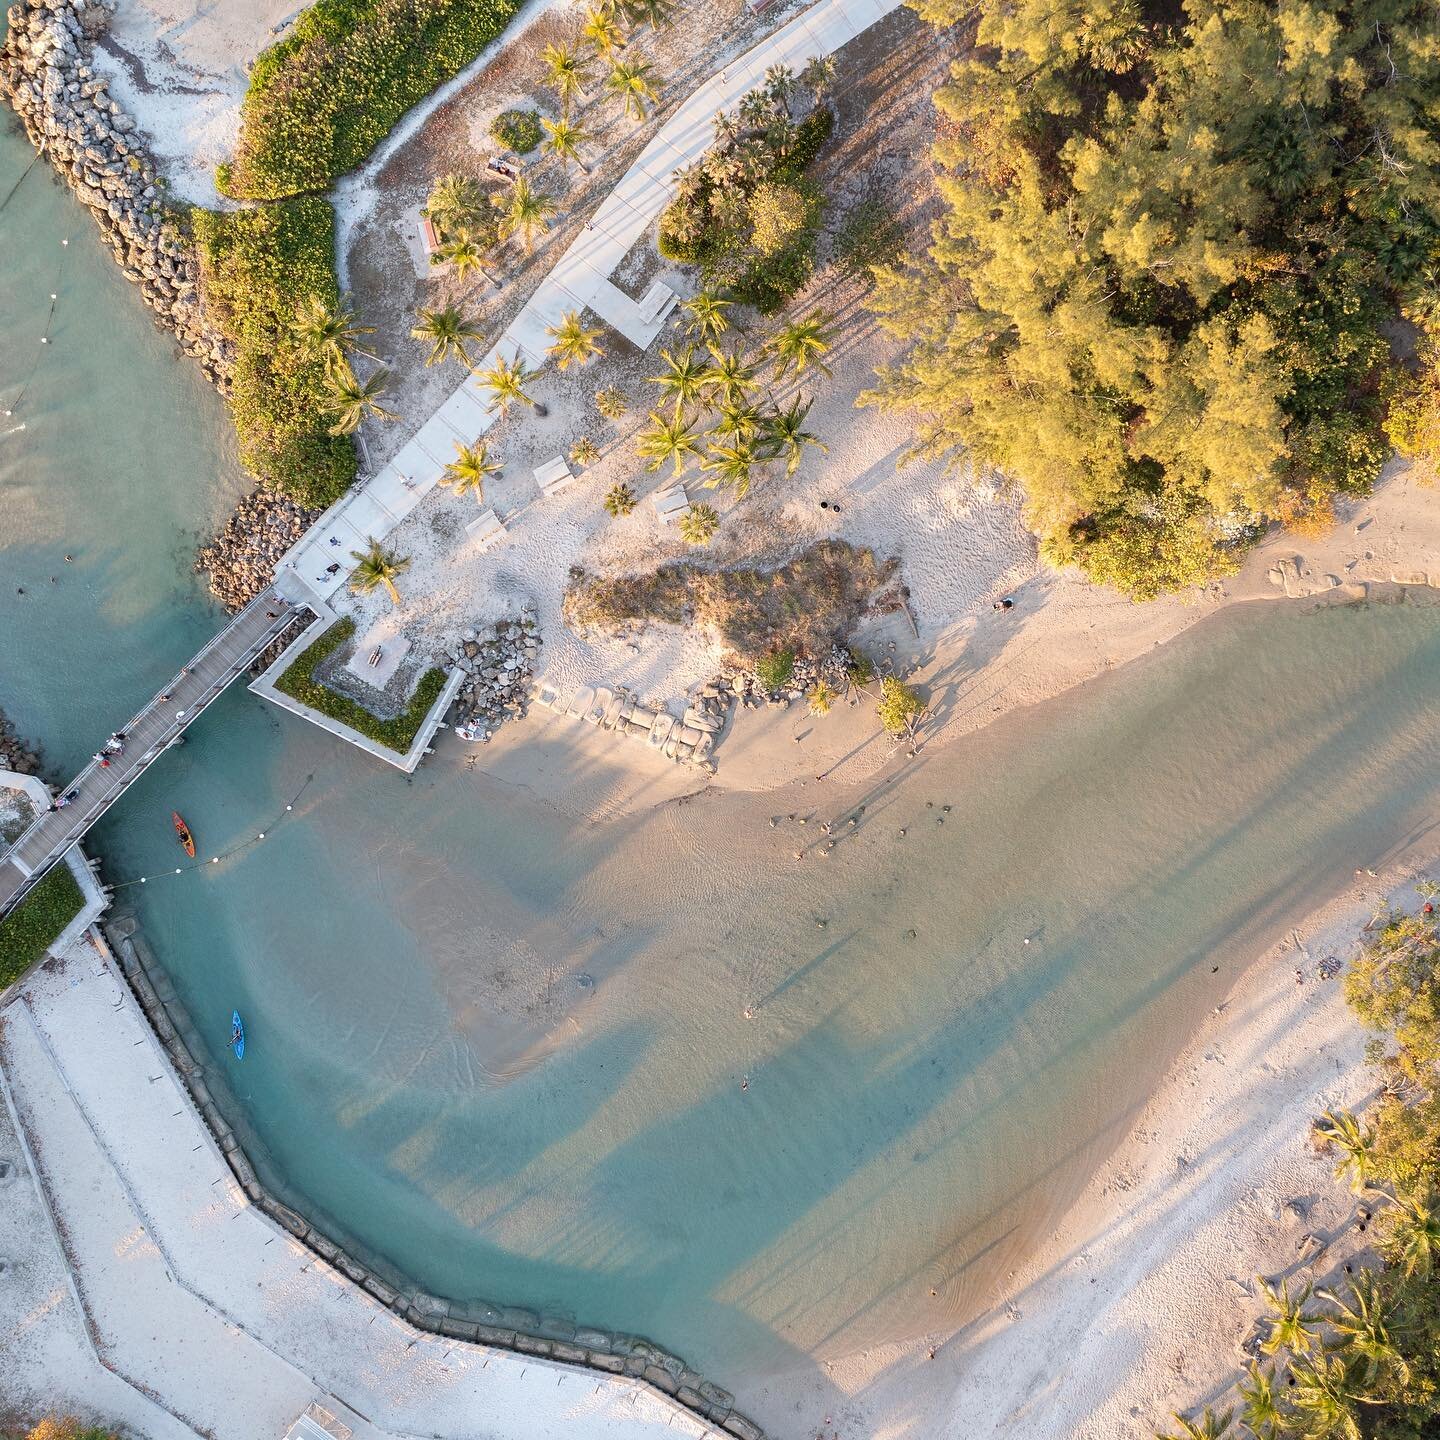 The lagoon at Dubois Park

#discoverjupiterfl #djiglobal #dronelife #droneoftheday #dronestagram #fromwhereidrone #jupiterfl #jupiterflorida #paradise #juplife #jupiterfloridalife #palmbeach #florida #foreversummer #jupiterliving #jupscoop #injupiter